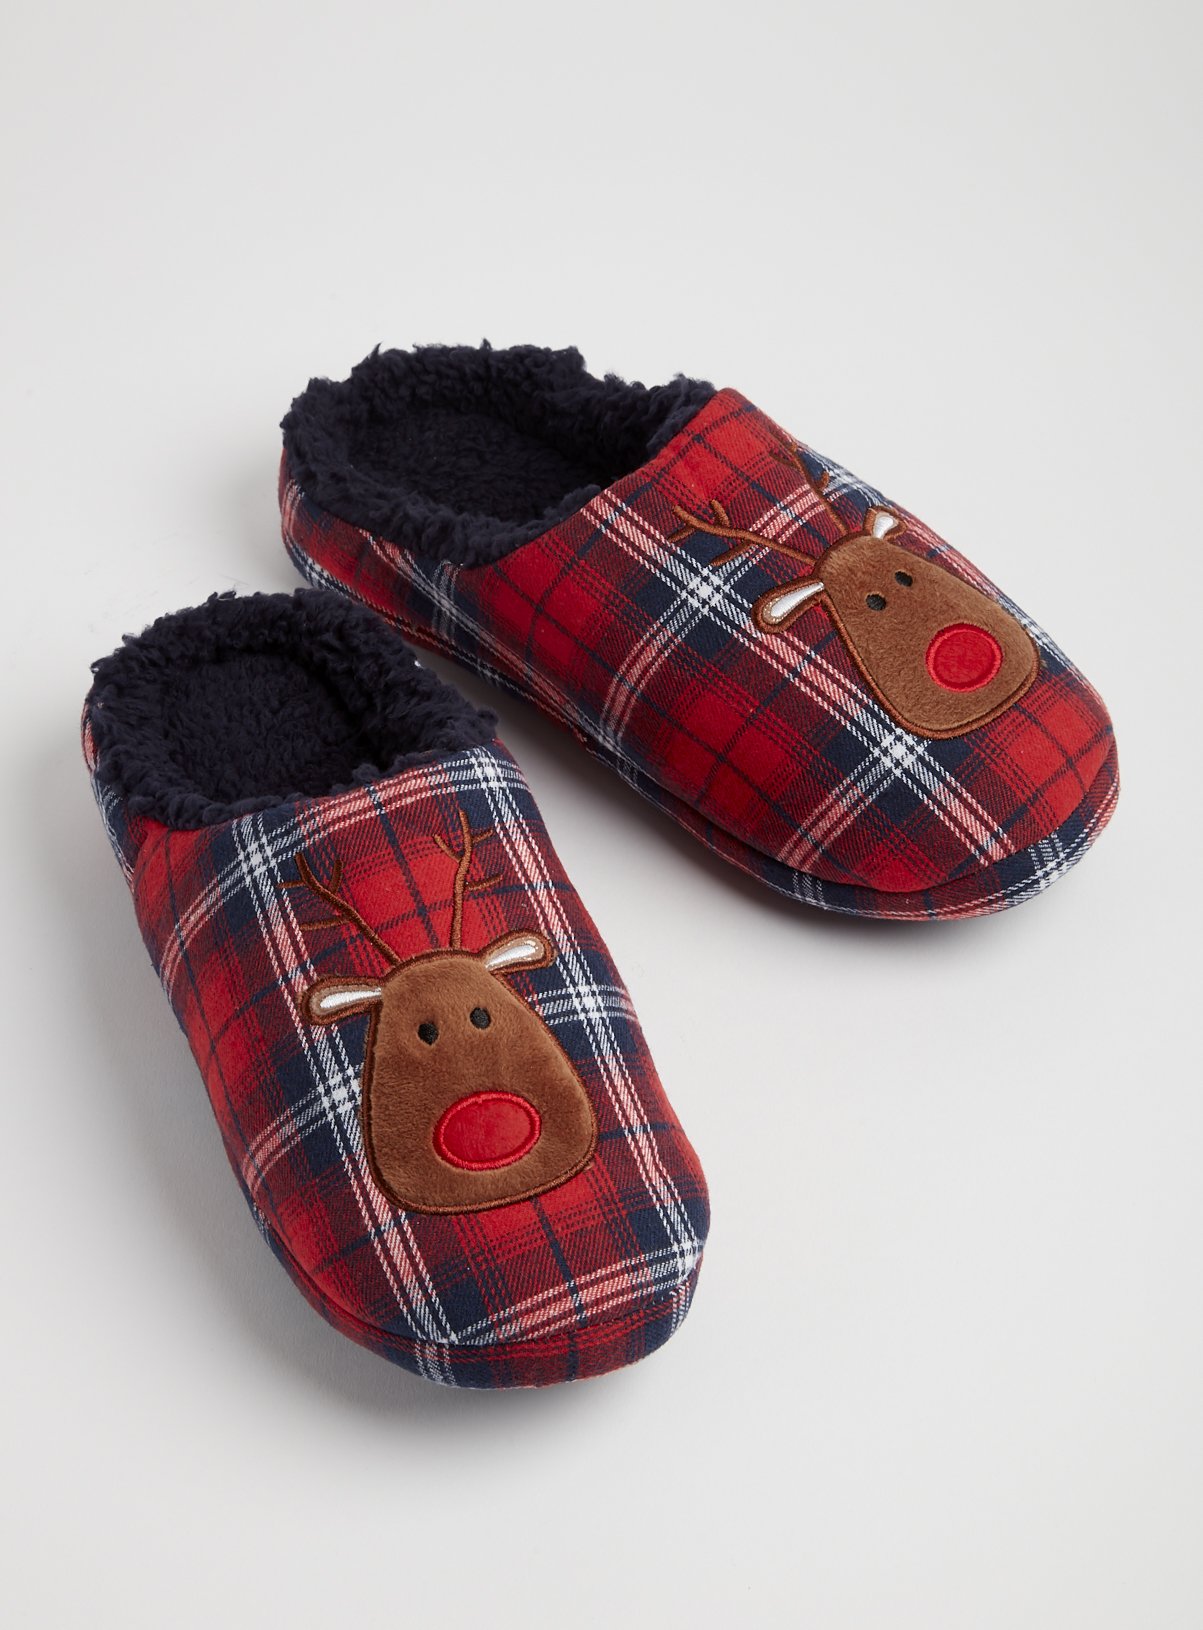 christmas slippers